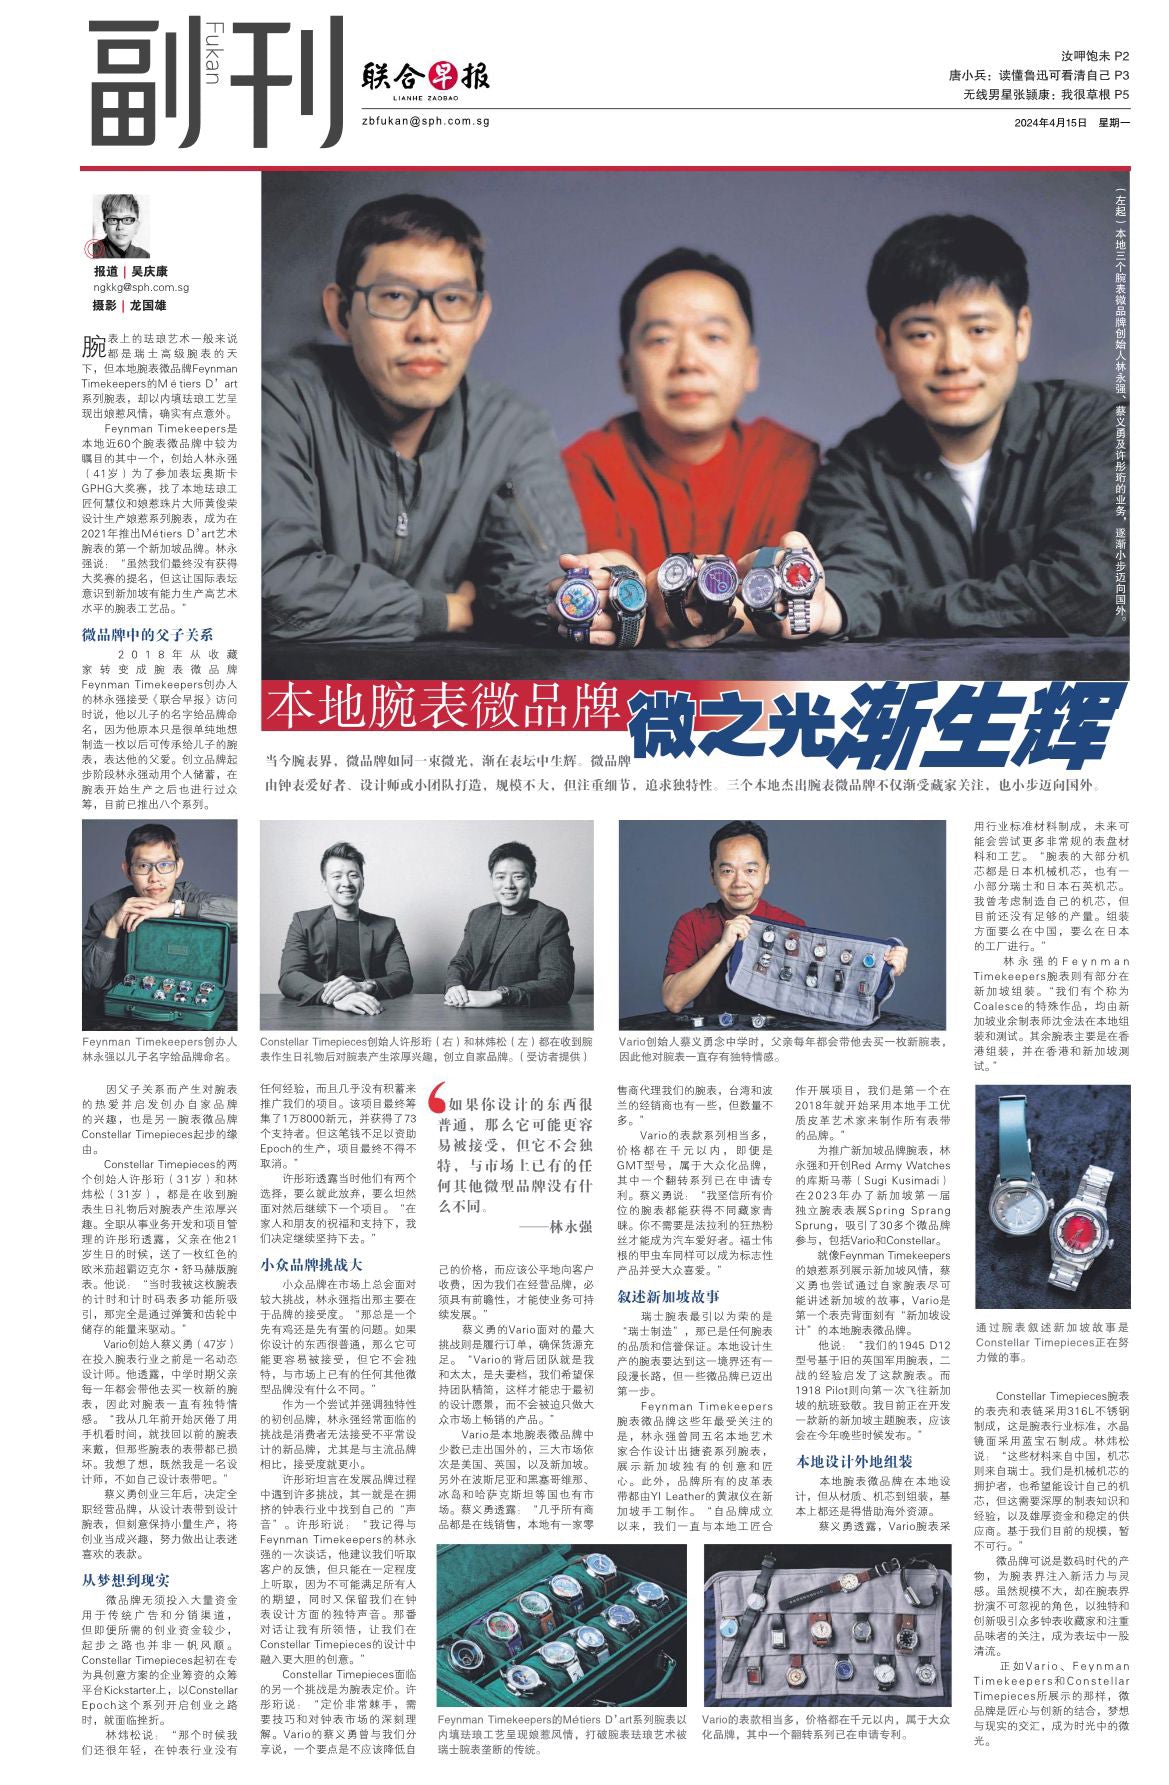 Ivan featured on Zao Bao newspaper